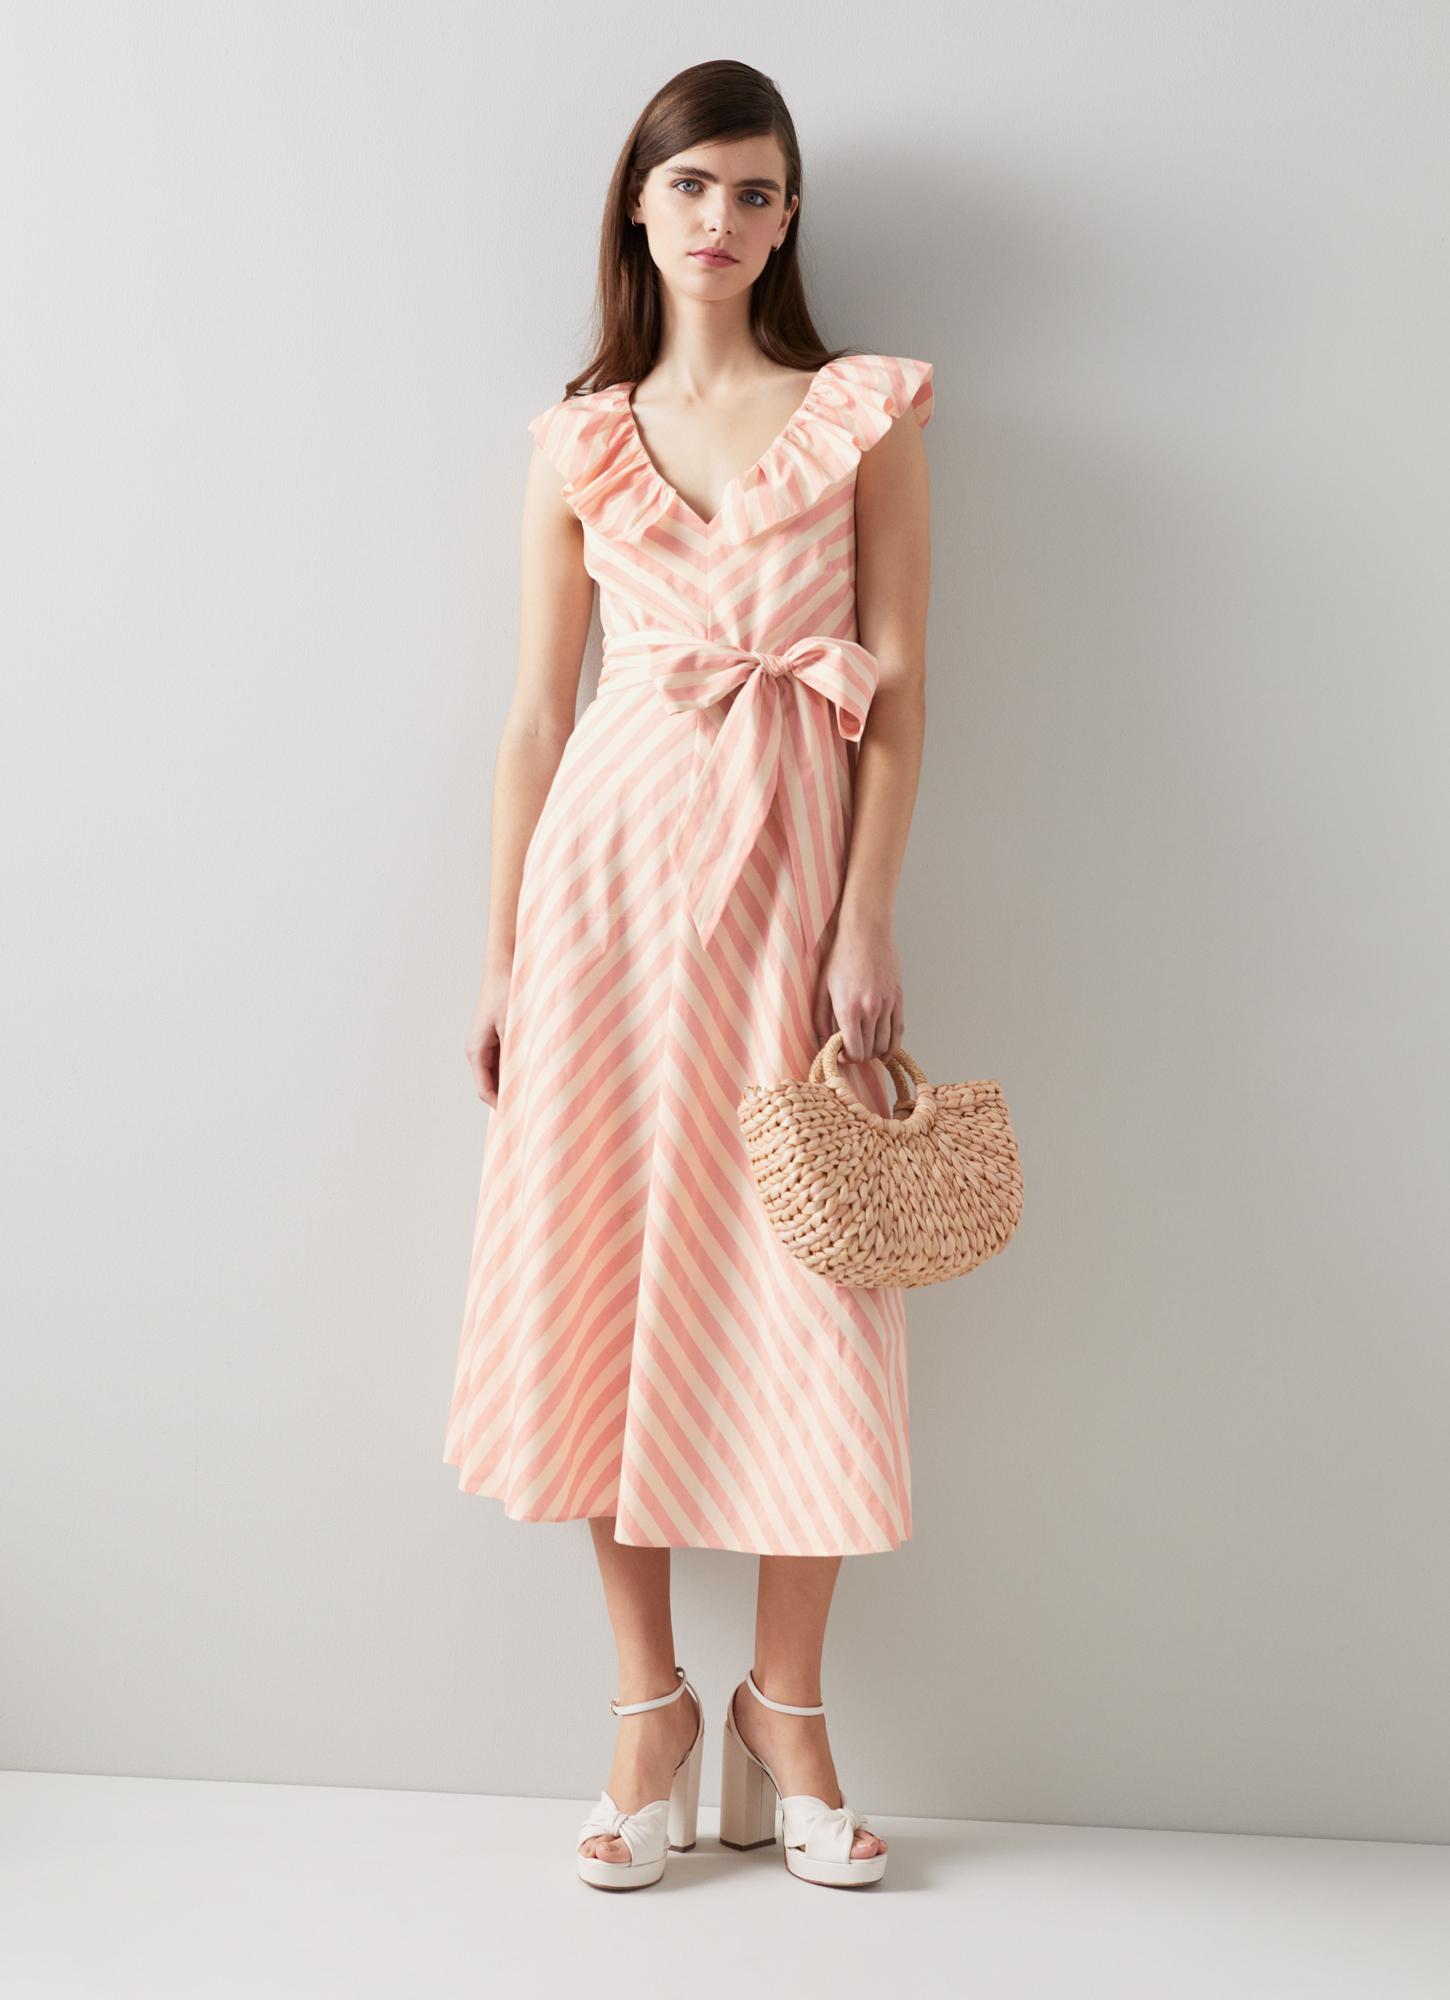 L.K.Bennett Shenyu Pink and White Cotton Candy Stripe Dress Striped Dress, Striped Dress